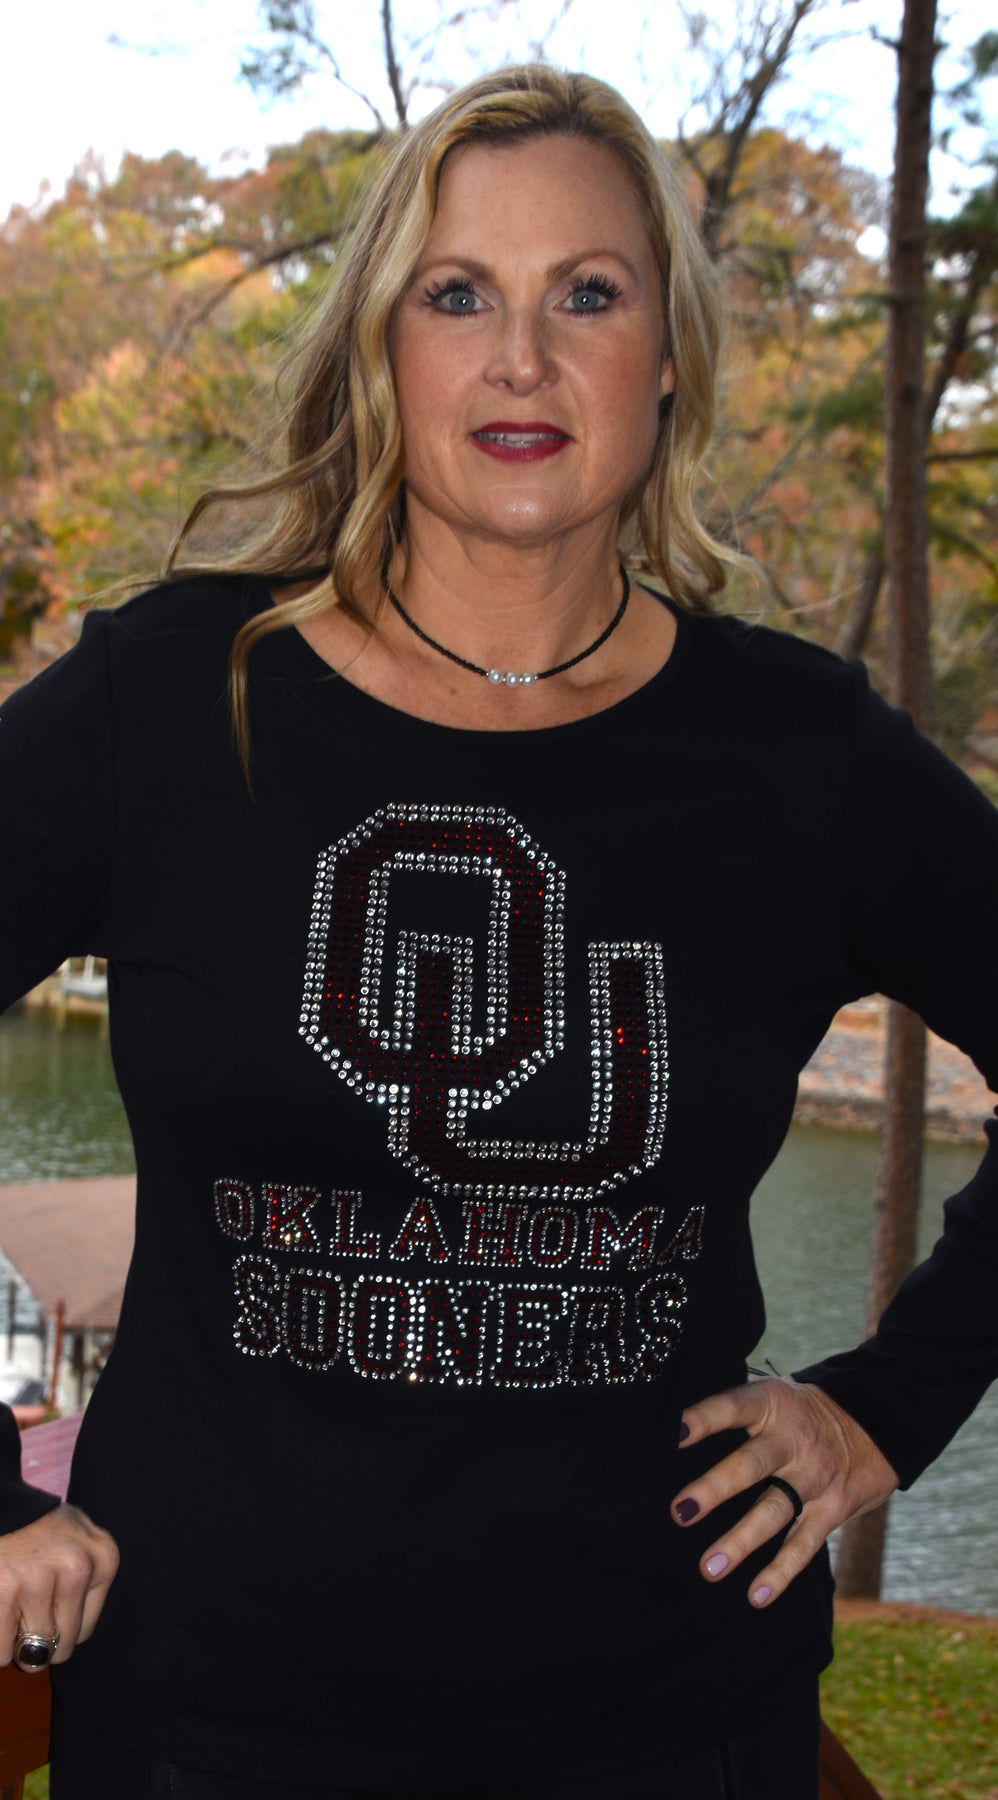 Oklahoma Sooners Heart Diamonds Boomer Sooner Shirt, hoodie